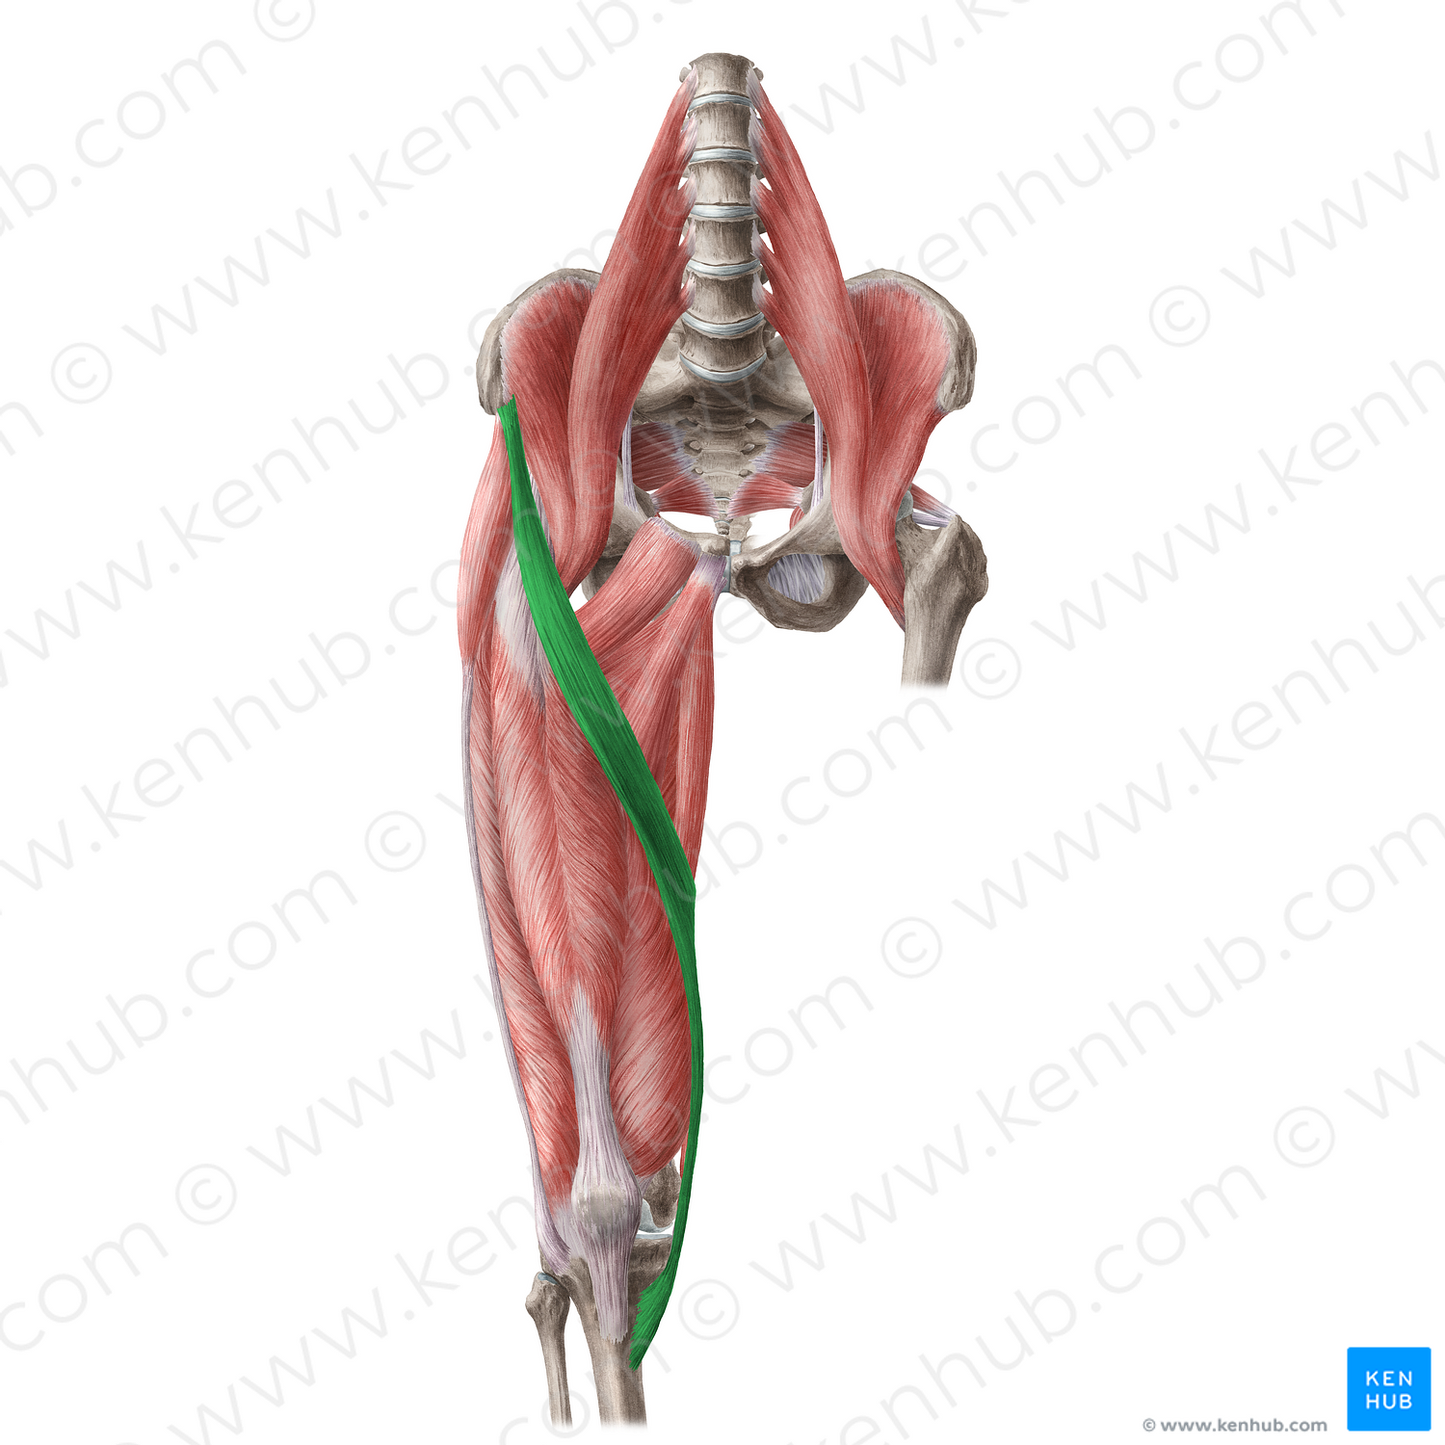 Sartorius muscle (#5891)